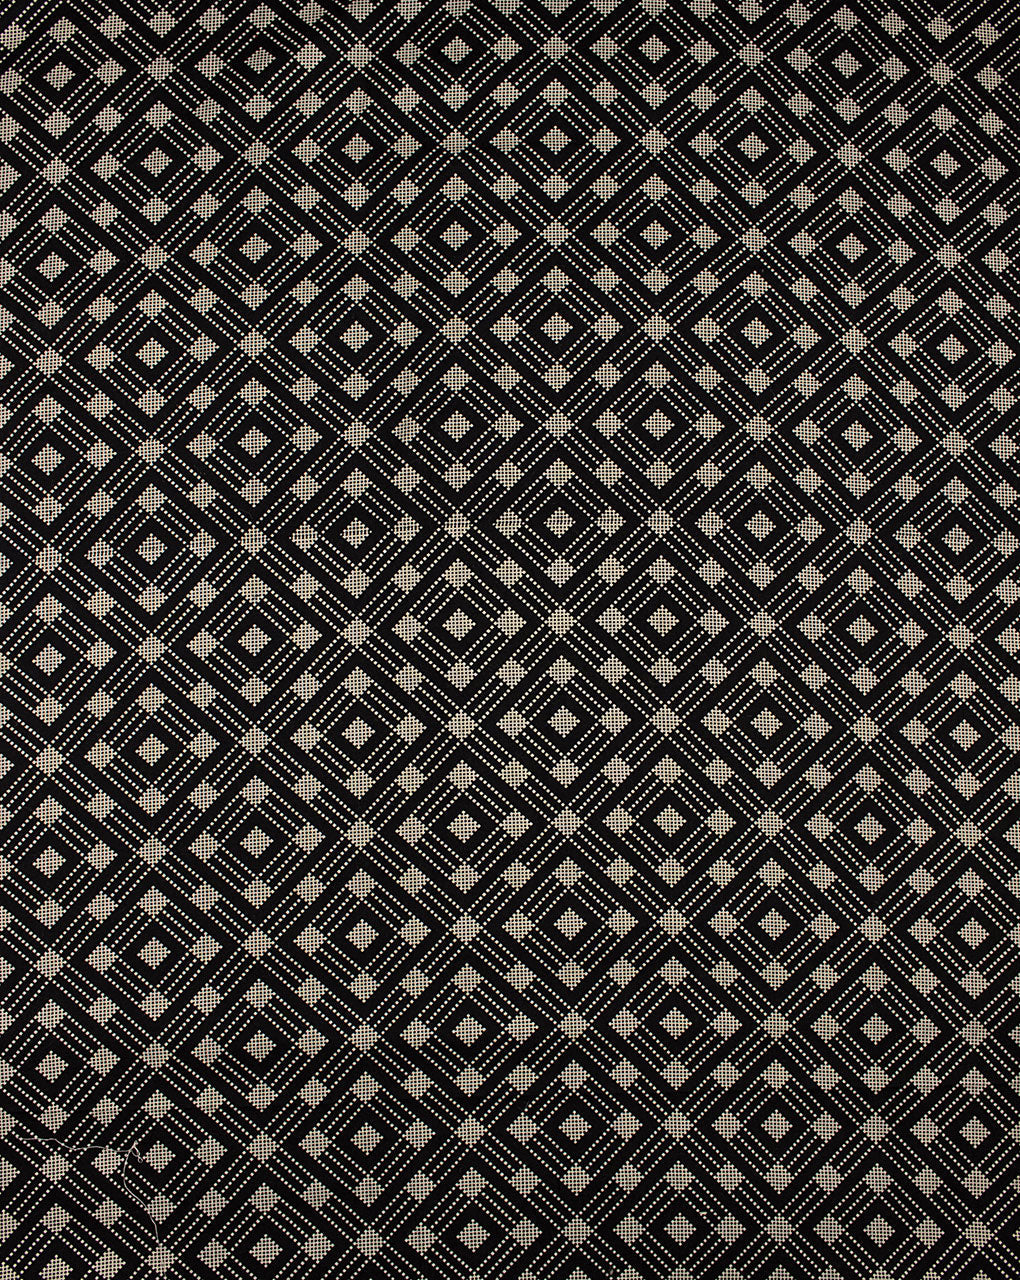 Geometric Screen Print Cotton Fabric - Fabriclore.com